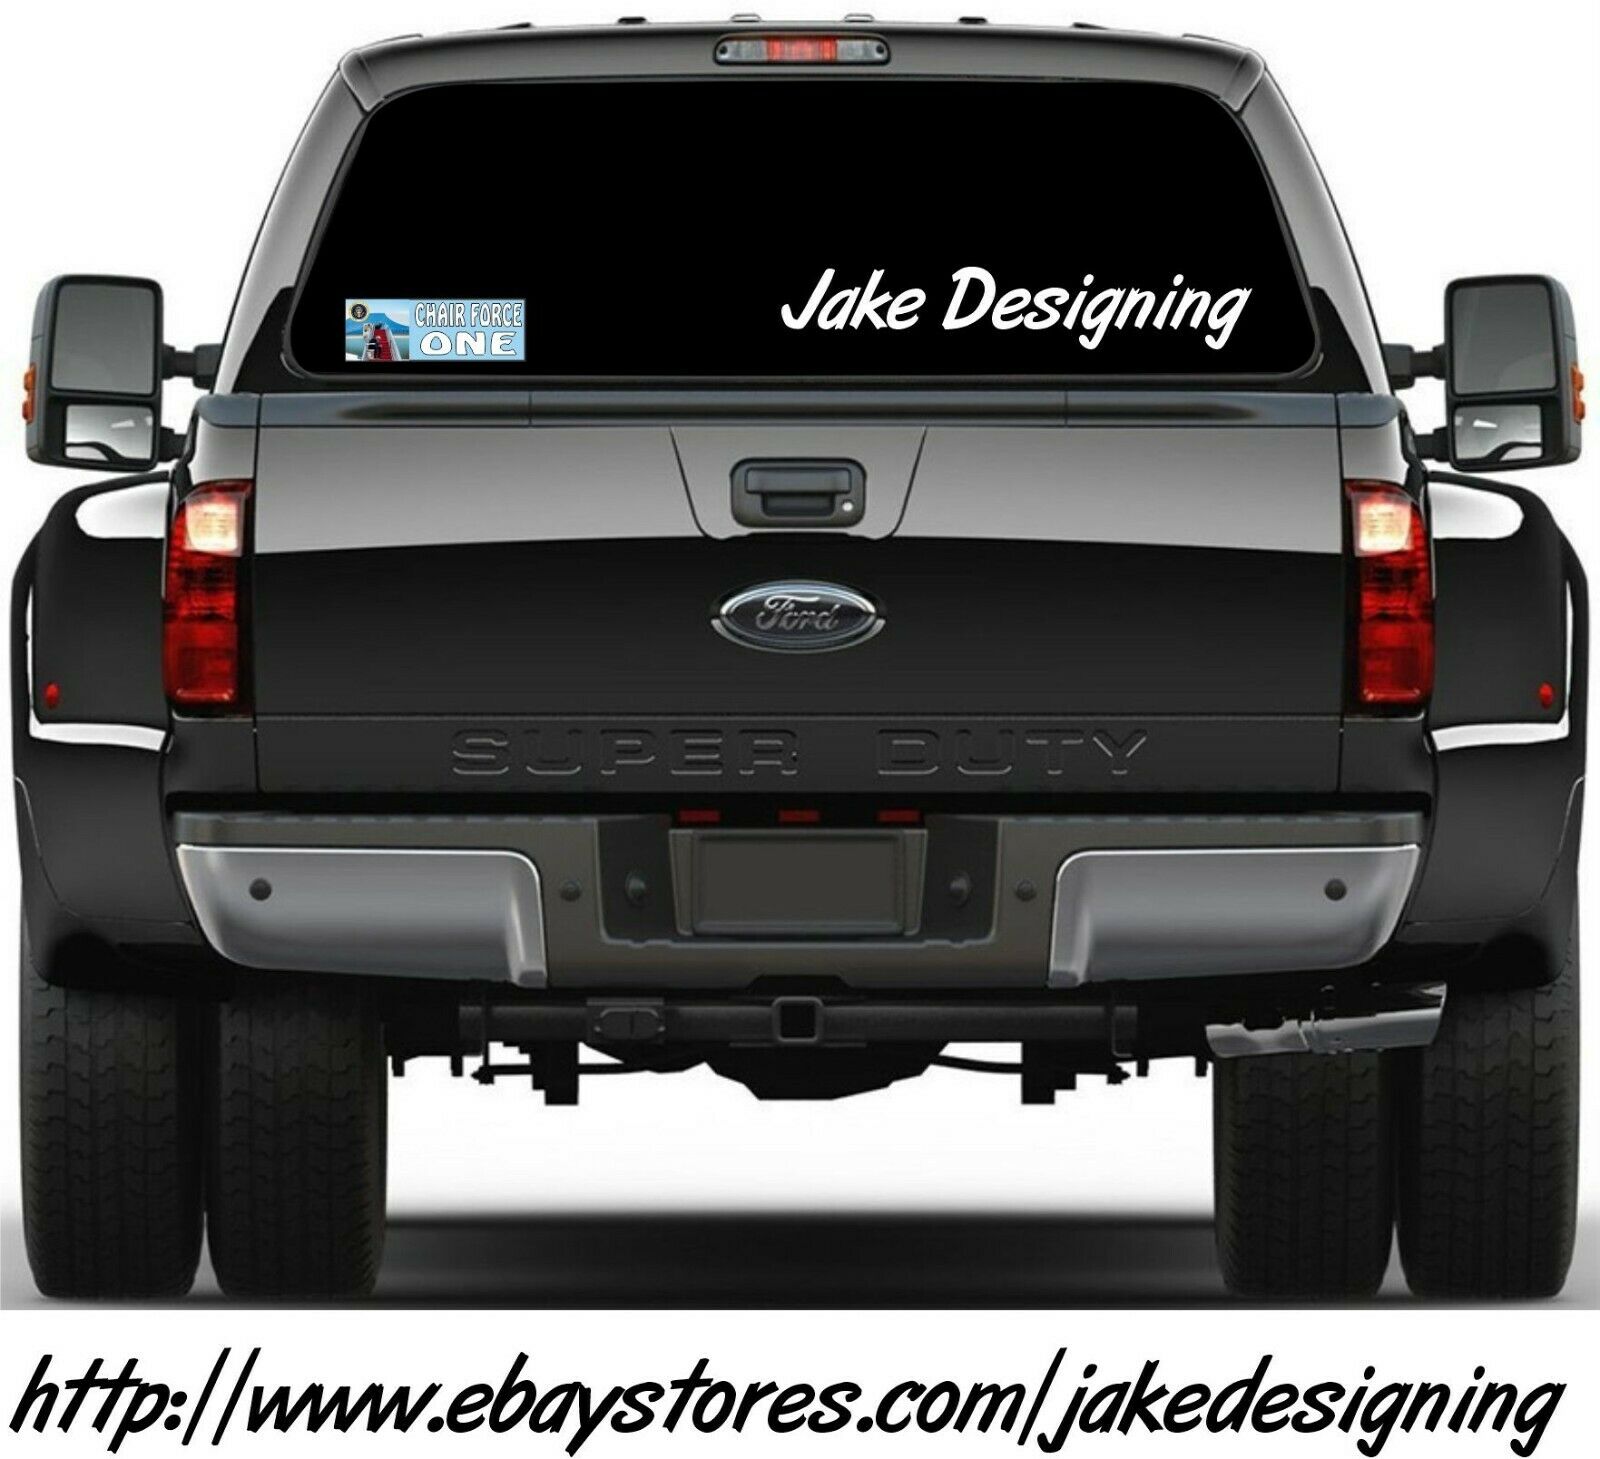 Anti Joe Biden Bernie Sander "Chair Force One Version 2 Bumper Sticker 8.6" x 3" - Powercall Sirens LLC